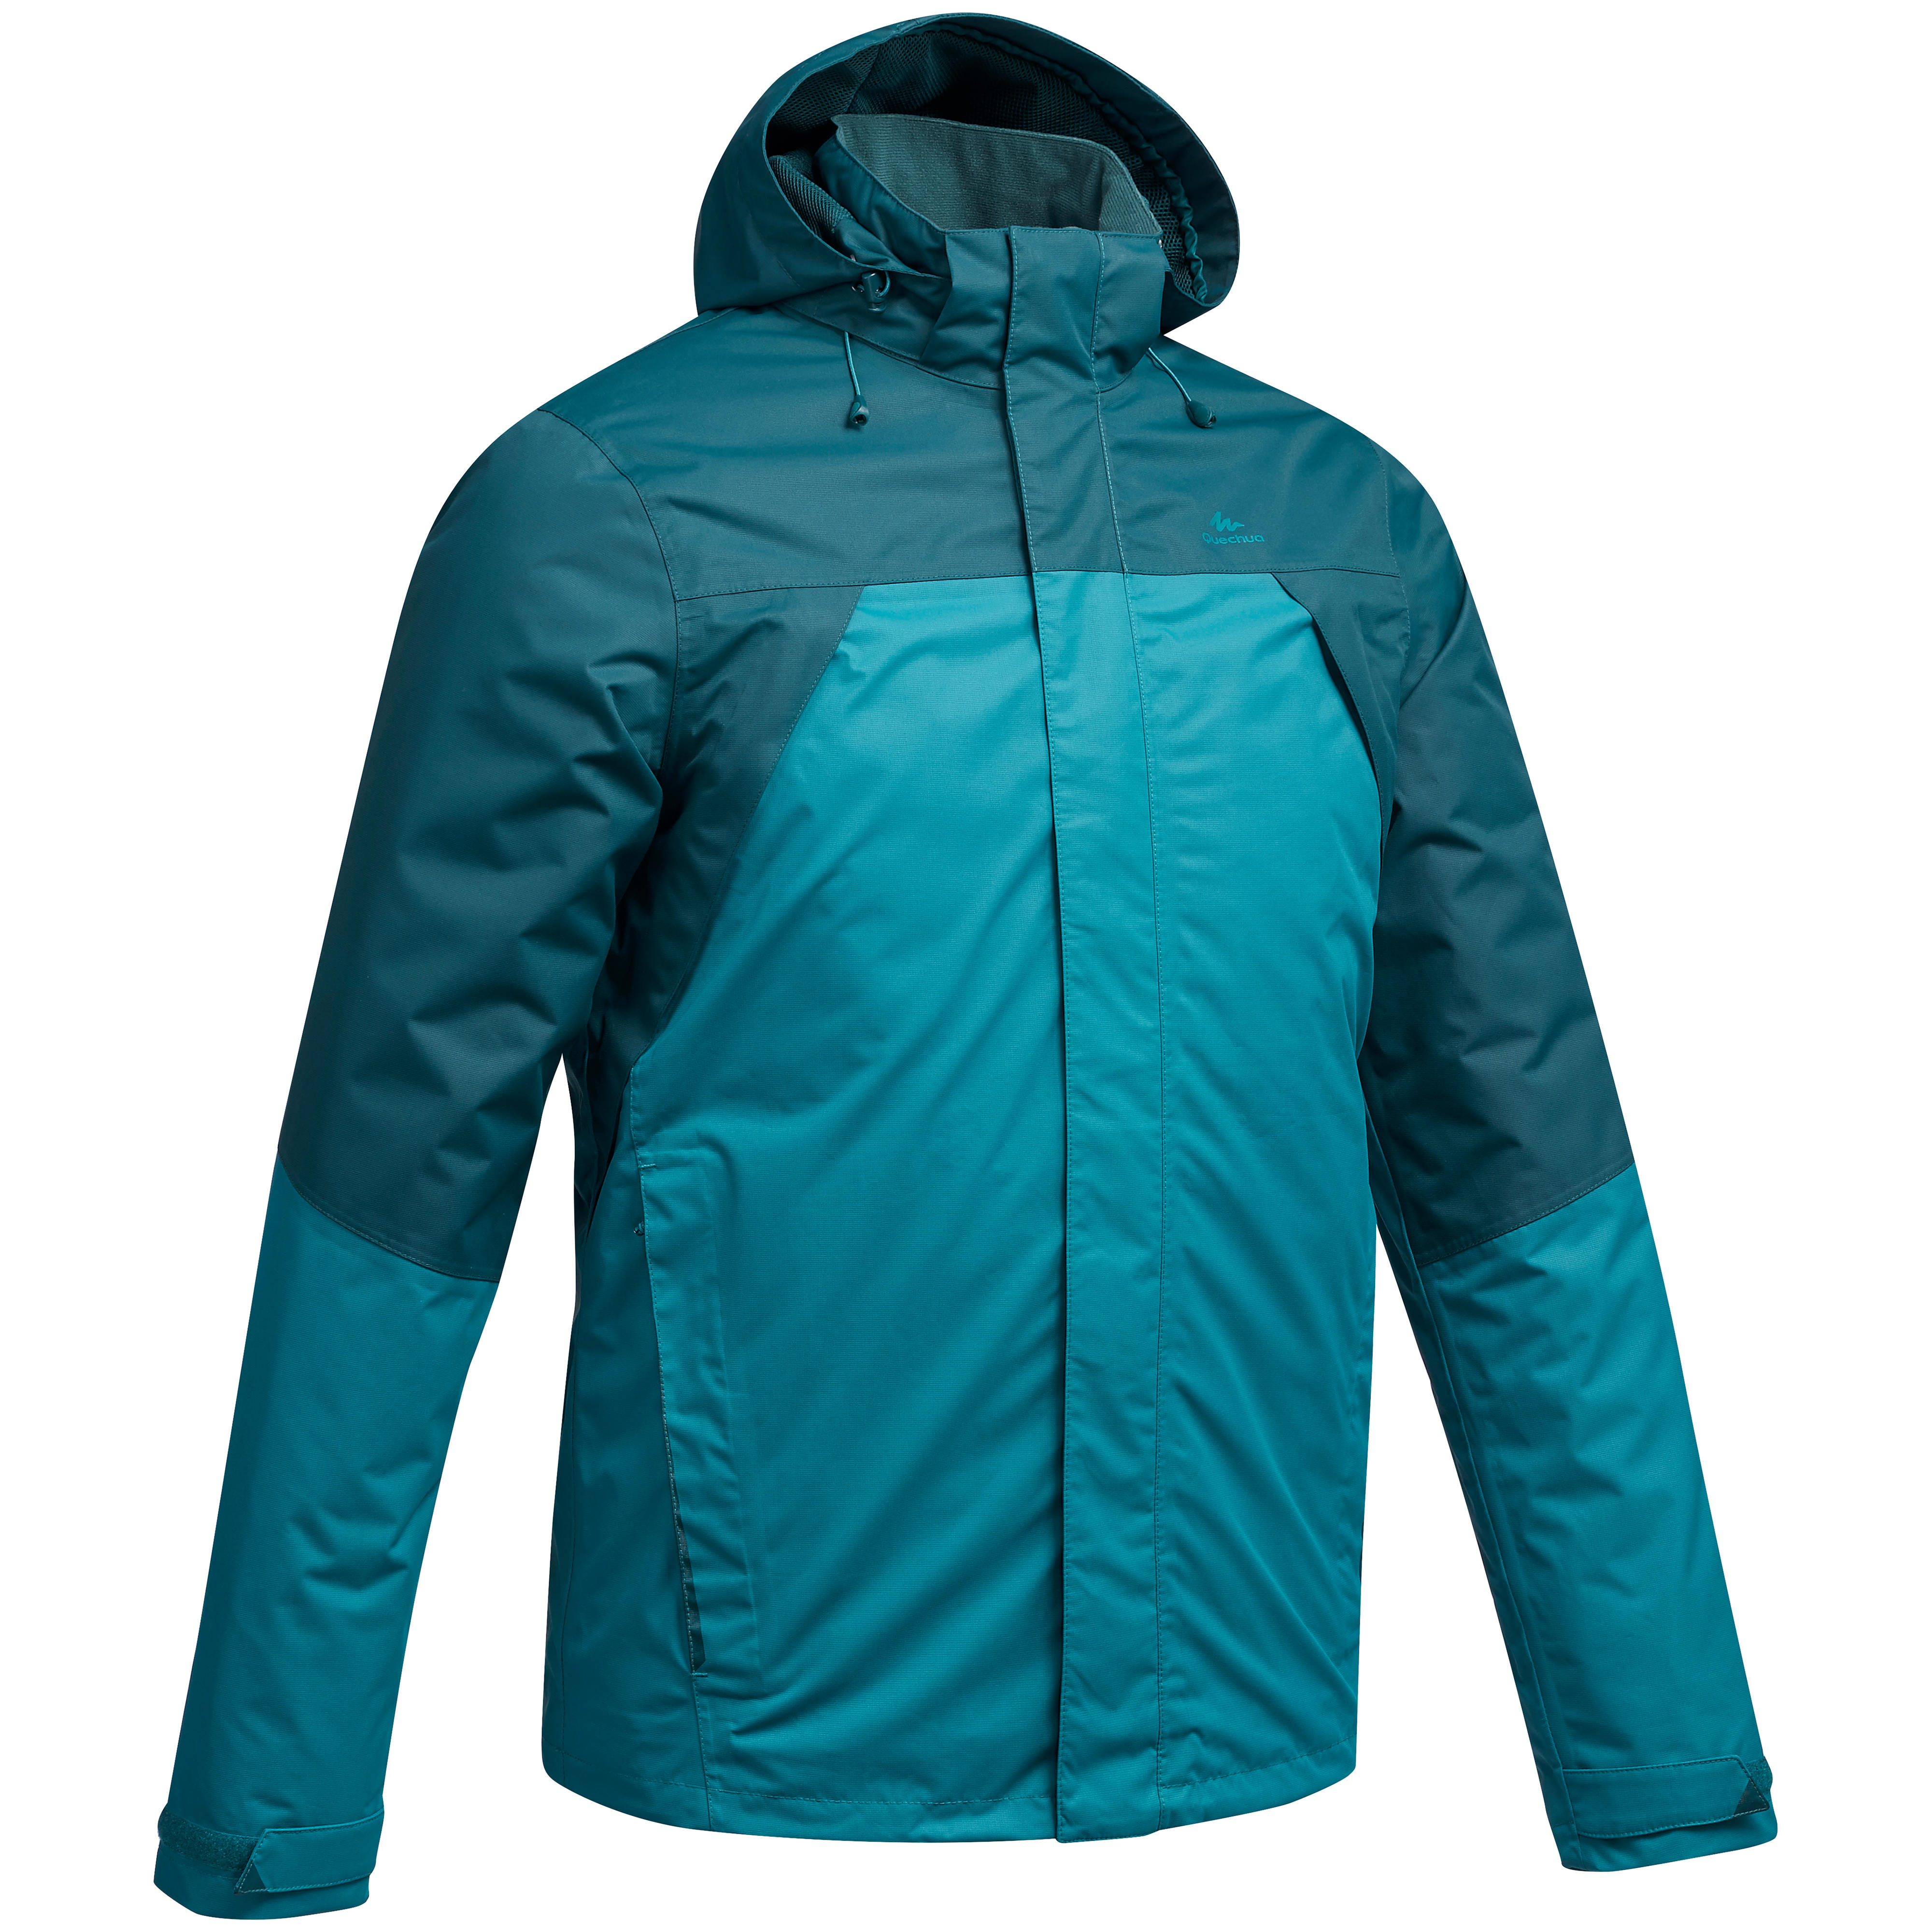 decathlon jacket waterproof